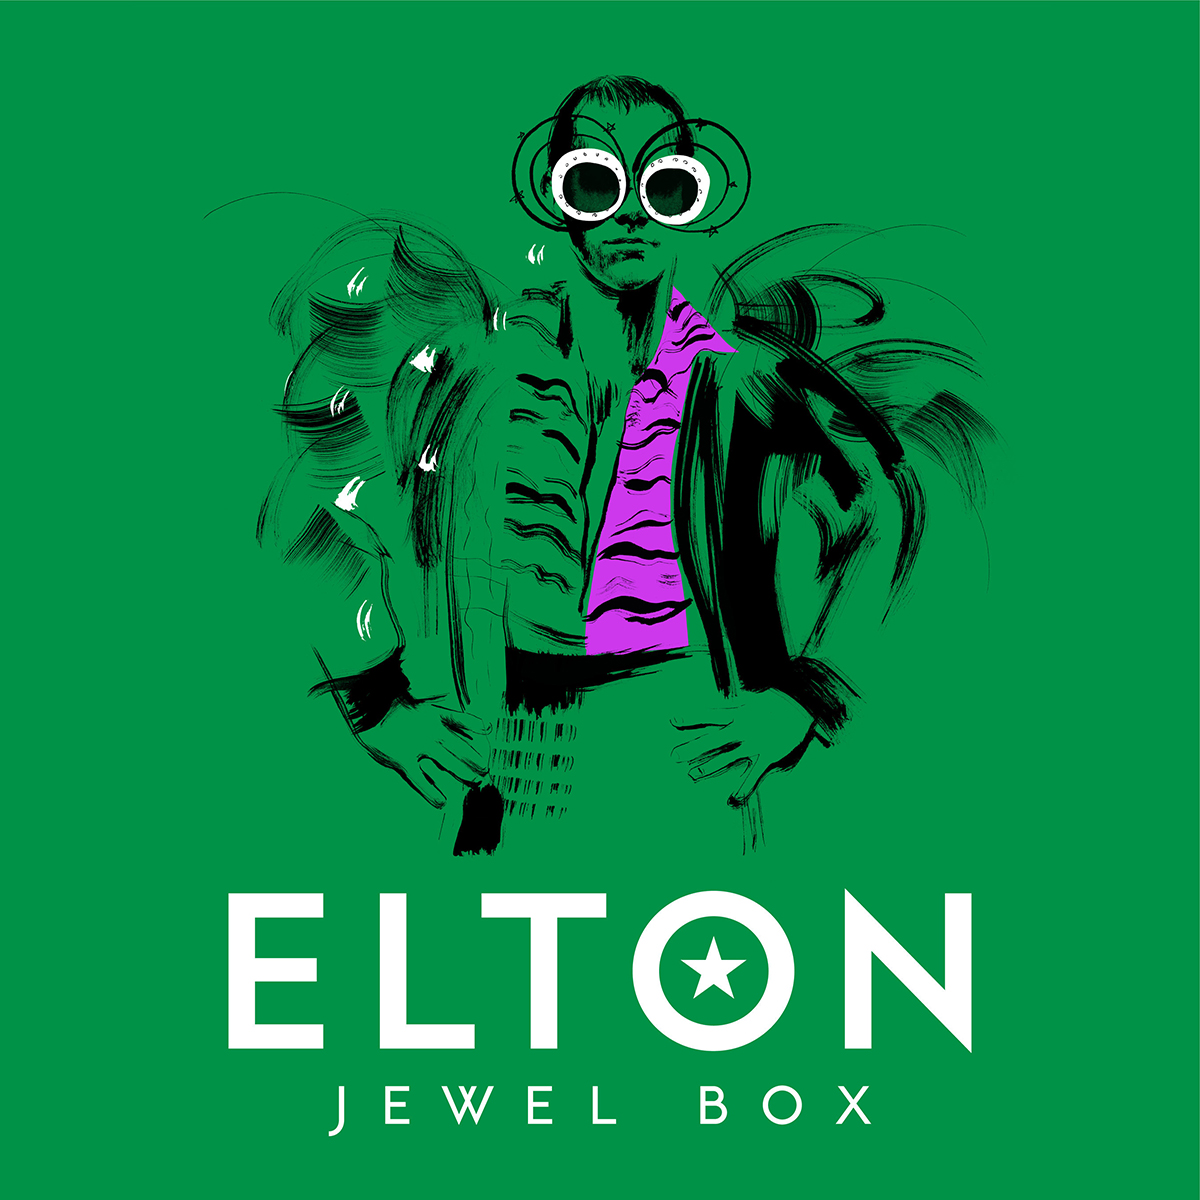 Elton John: Jewel Box